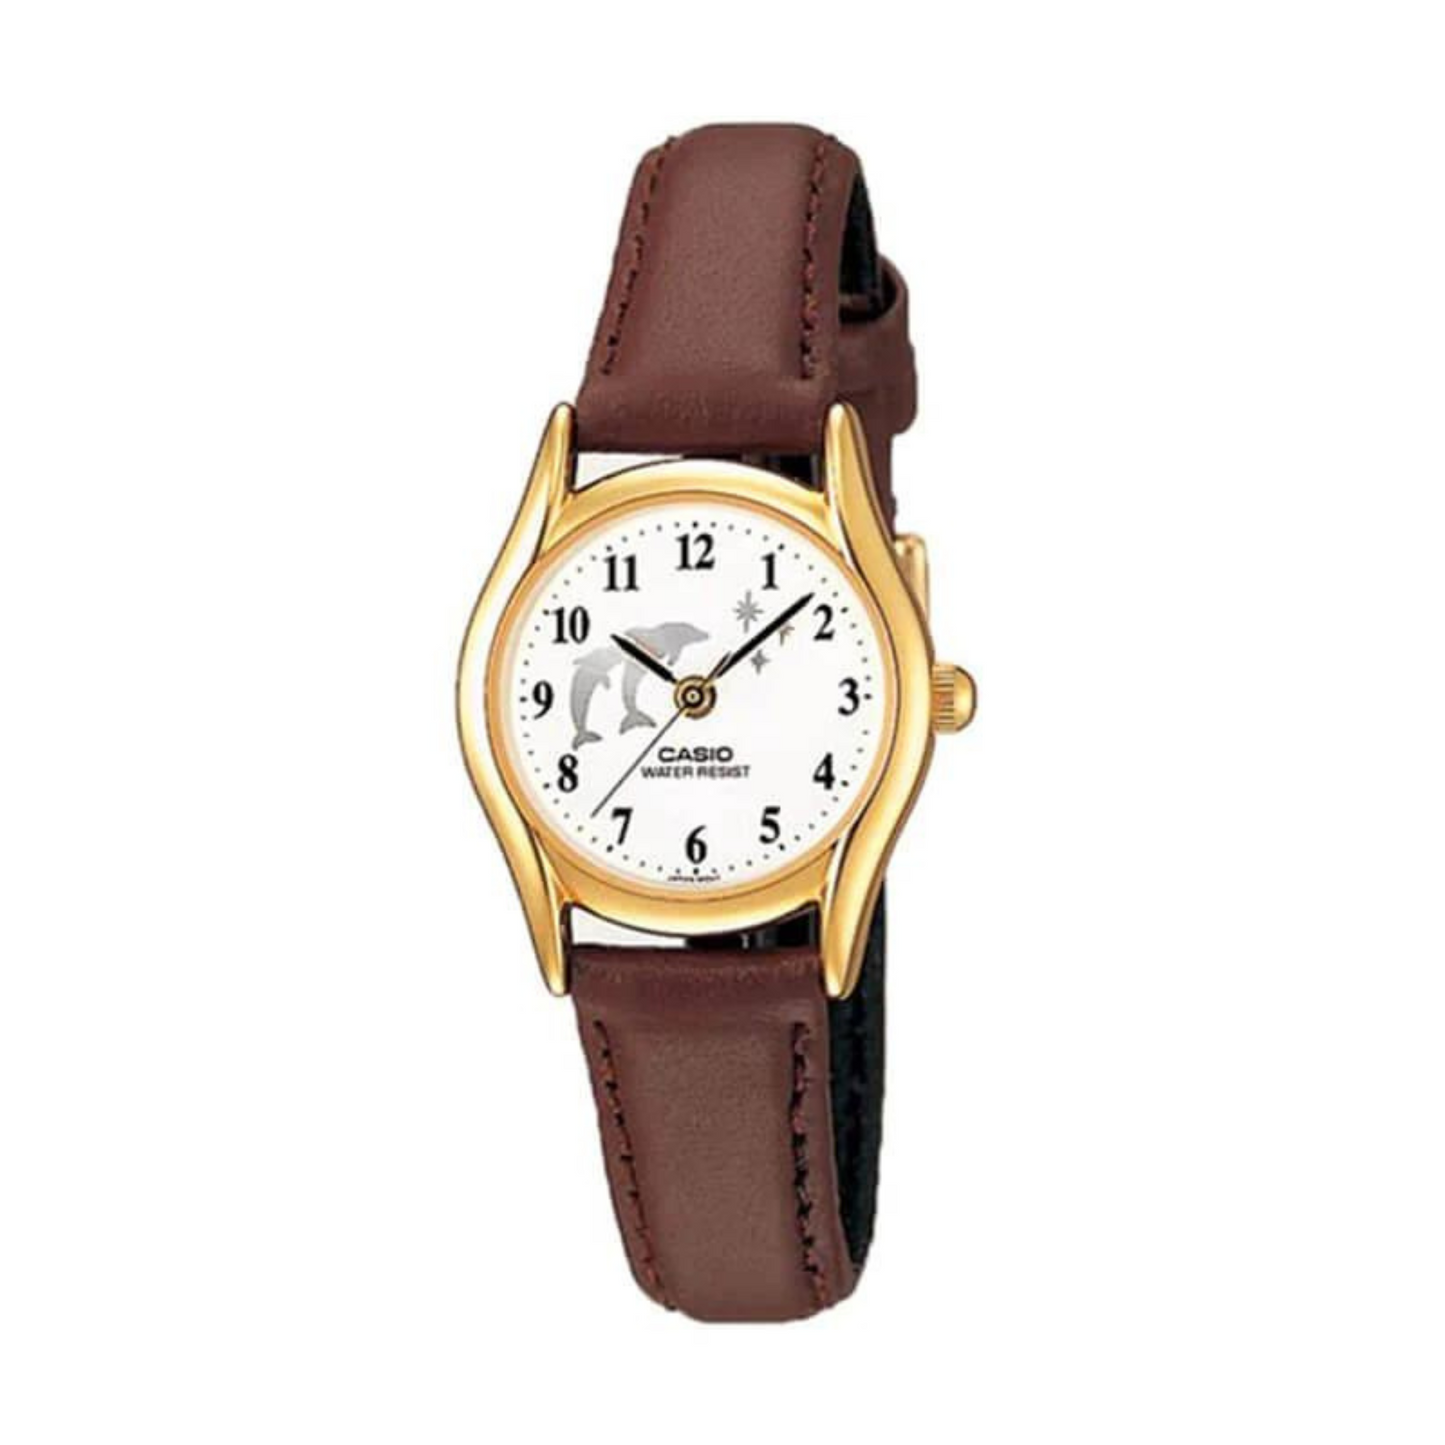 Reloj Casio mujer Modelo LTP-1094Q-7B9